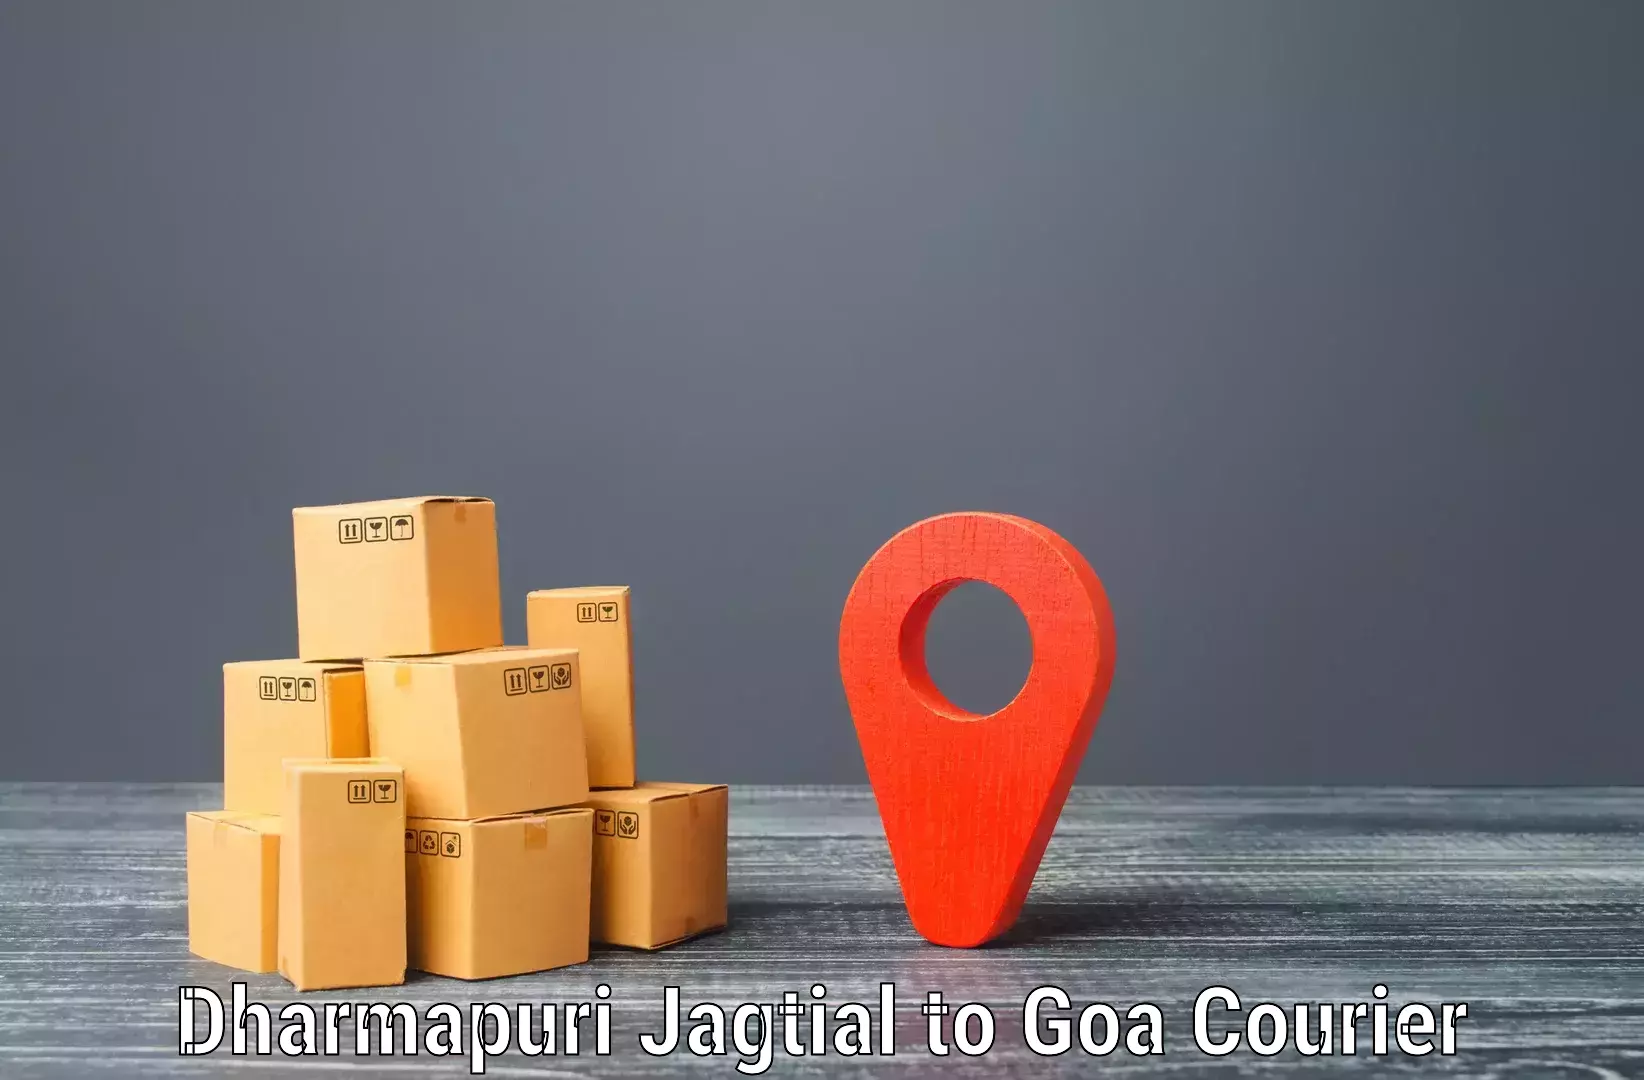 Large package courier Dharmapuri Jagtial to Goa